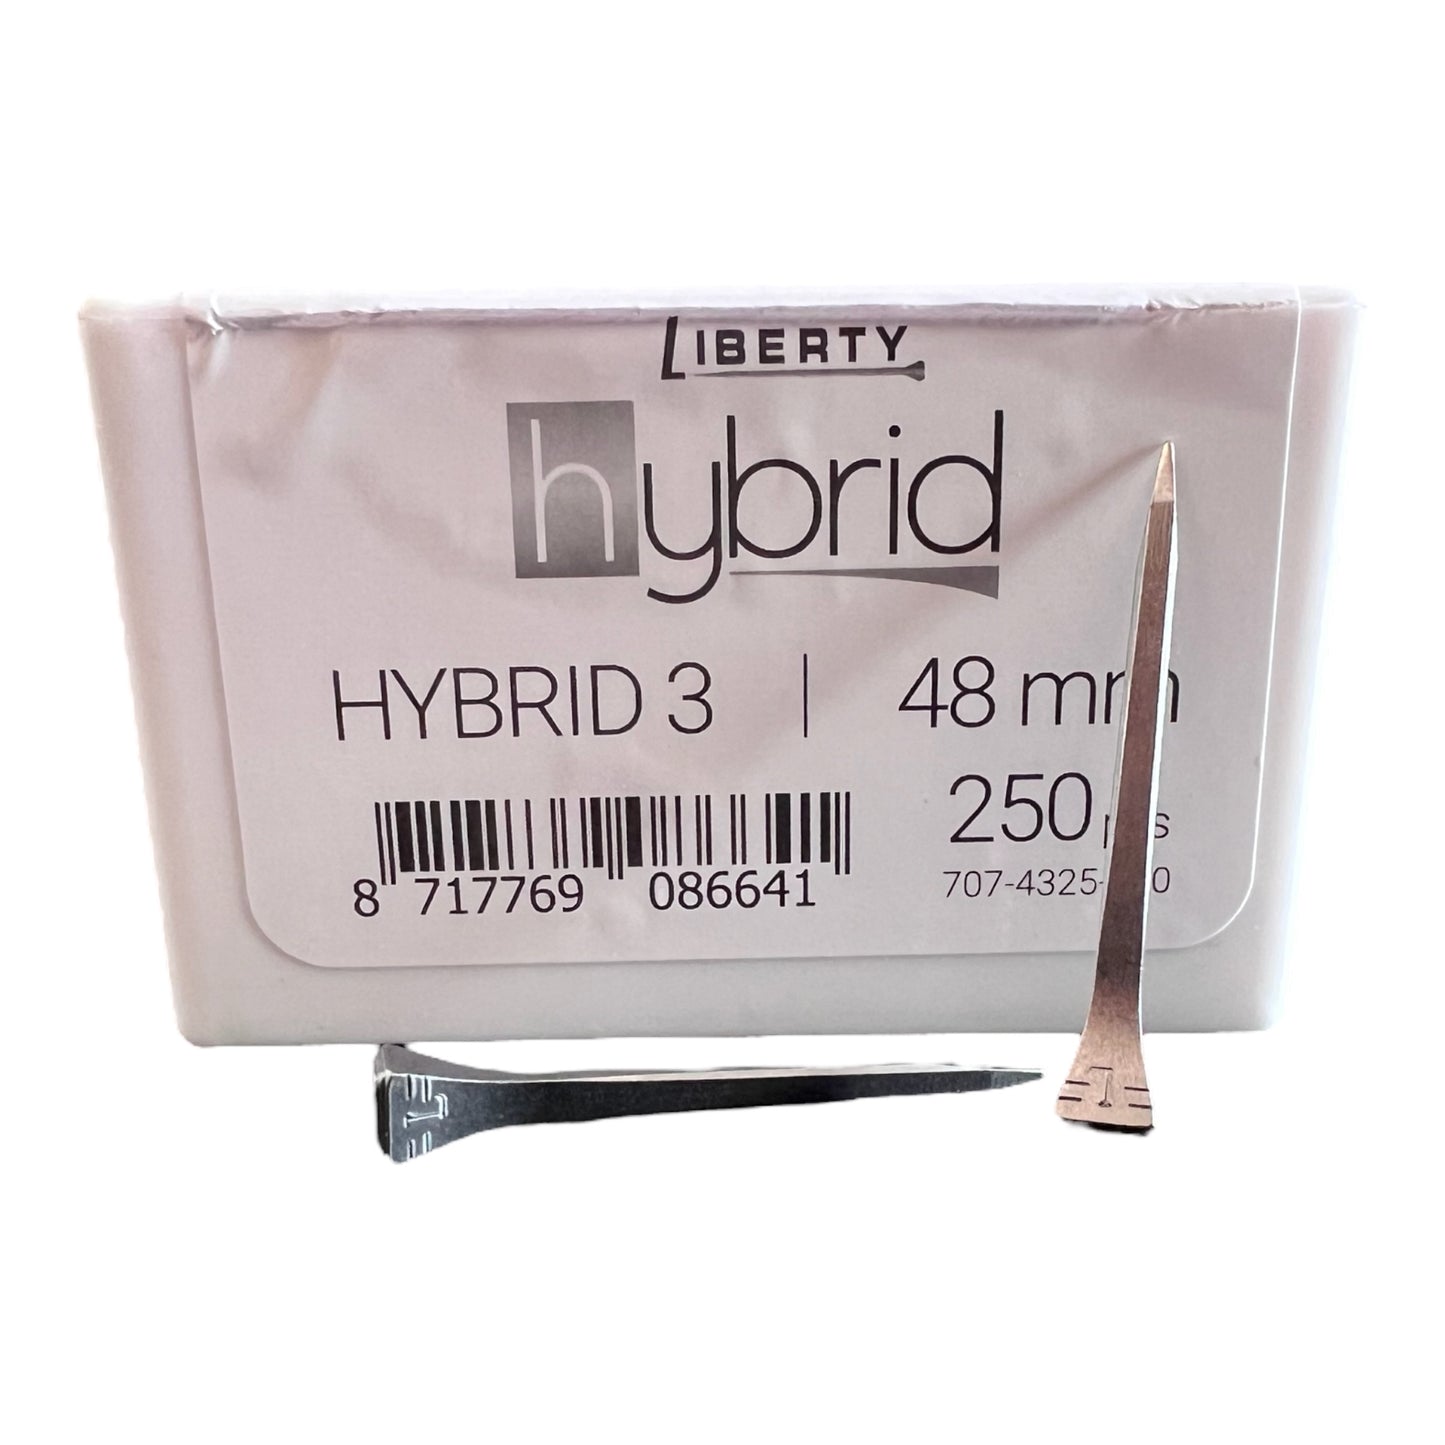 LIBERTY HYBRID 3 NAILS 250PCS